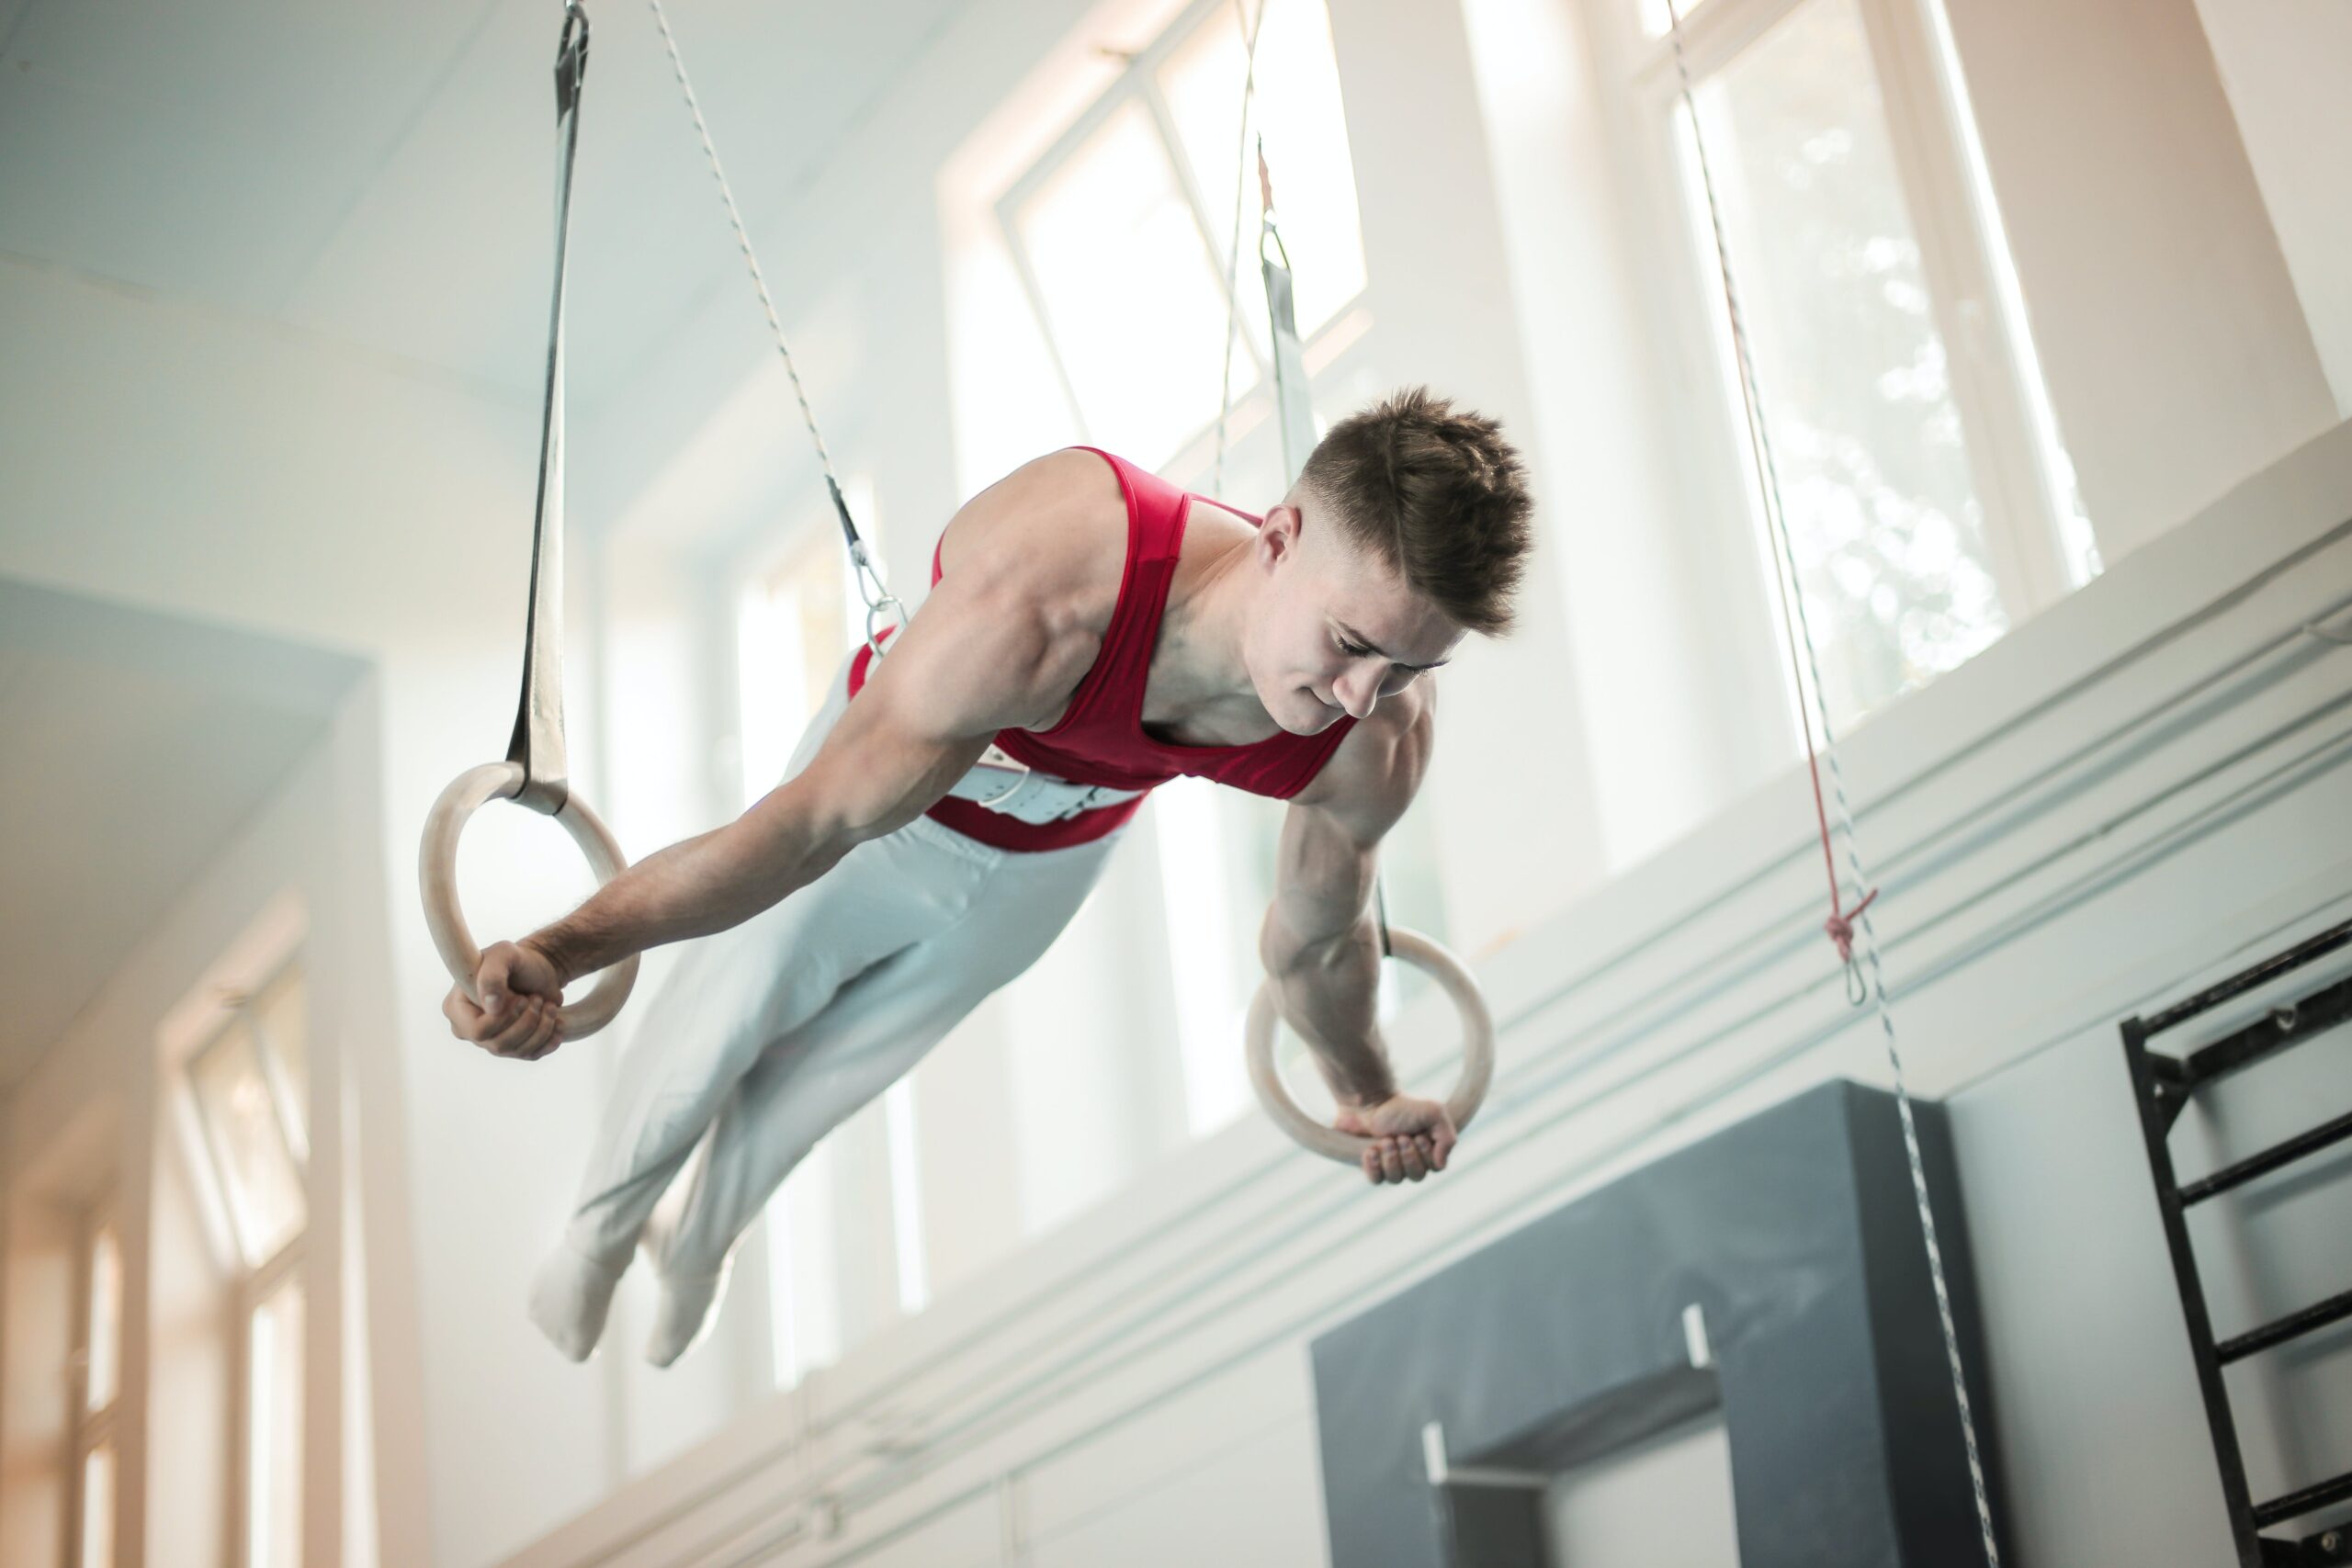 Artistic Gymnastics JWCH Women’s Podium Training Uneven bars